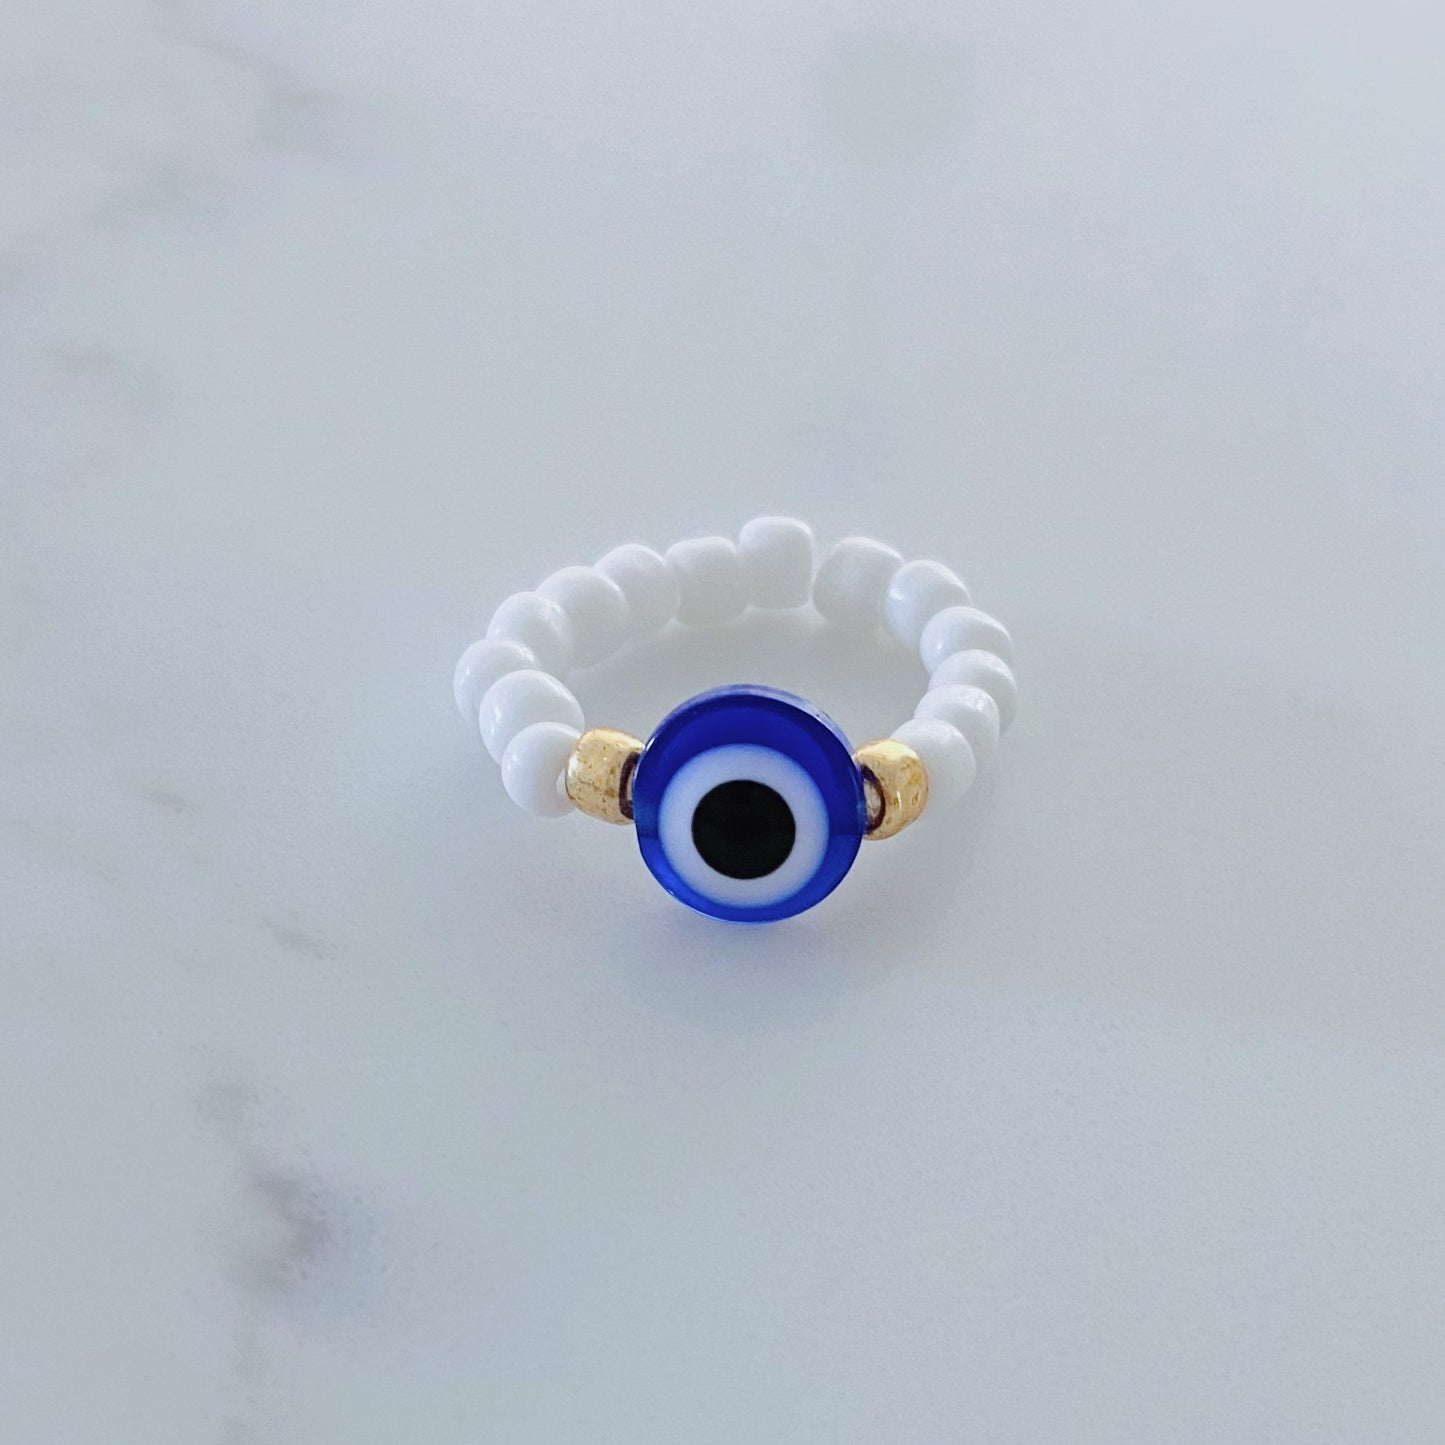 Evil eye bead ring